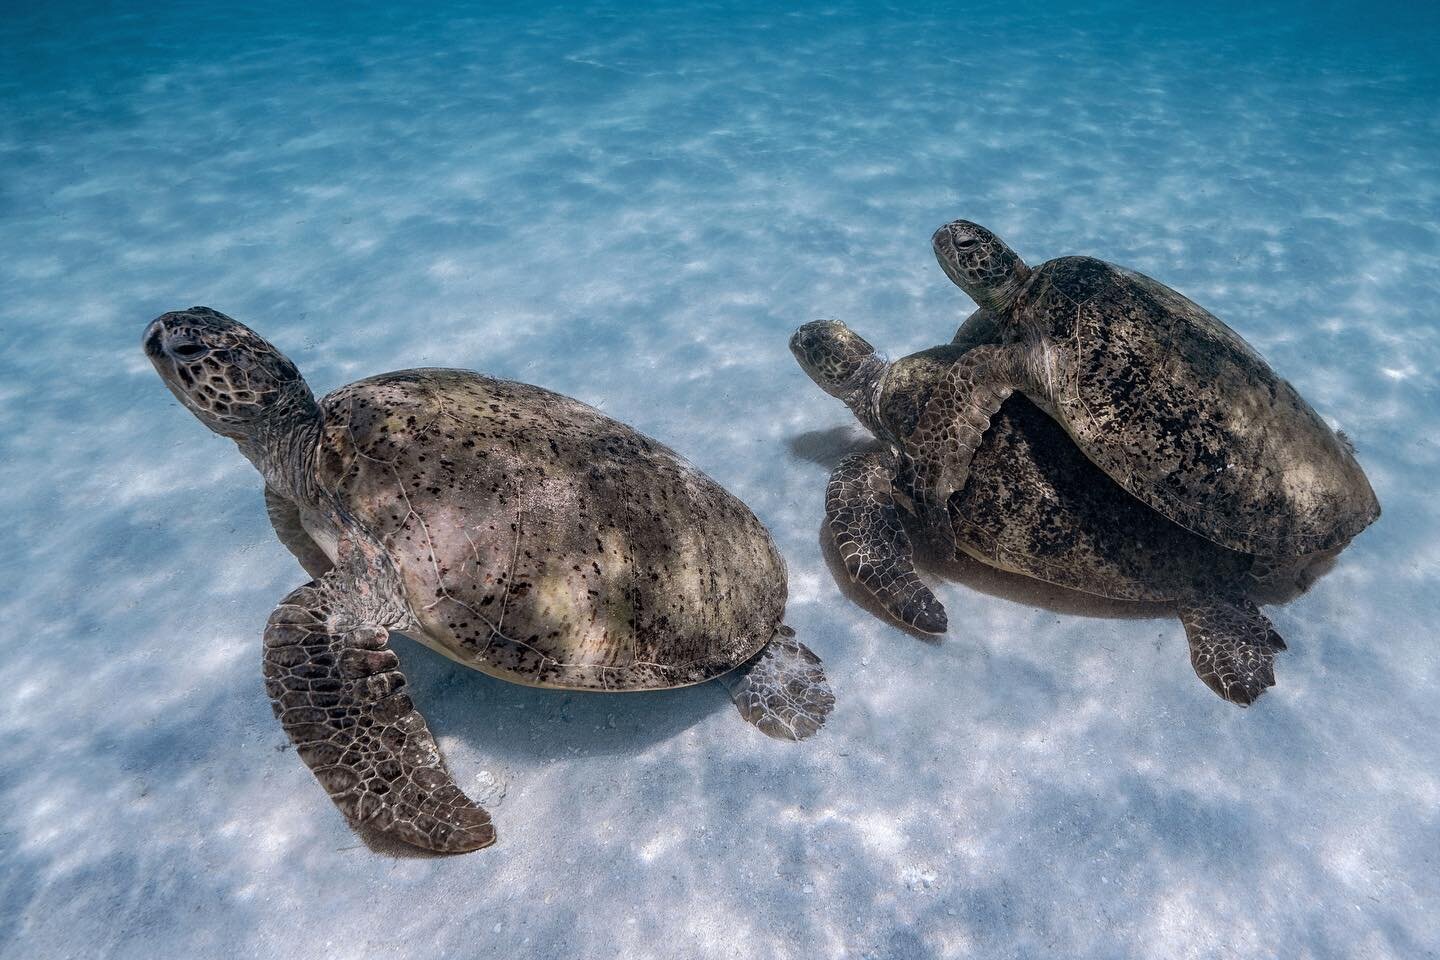 Days at the Muiron Islands spent watching turtles getting frisky 🐢 
.
.
#turtle #turtles #seaturtle #seaturtles #seaturtleconservation #seaturtlelove #turtlemating #ningaloo #ningalooreef #ningaloomarinepark #ningalooturtleprogram #ocean #oceanlife 